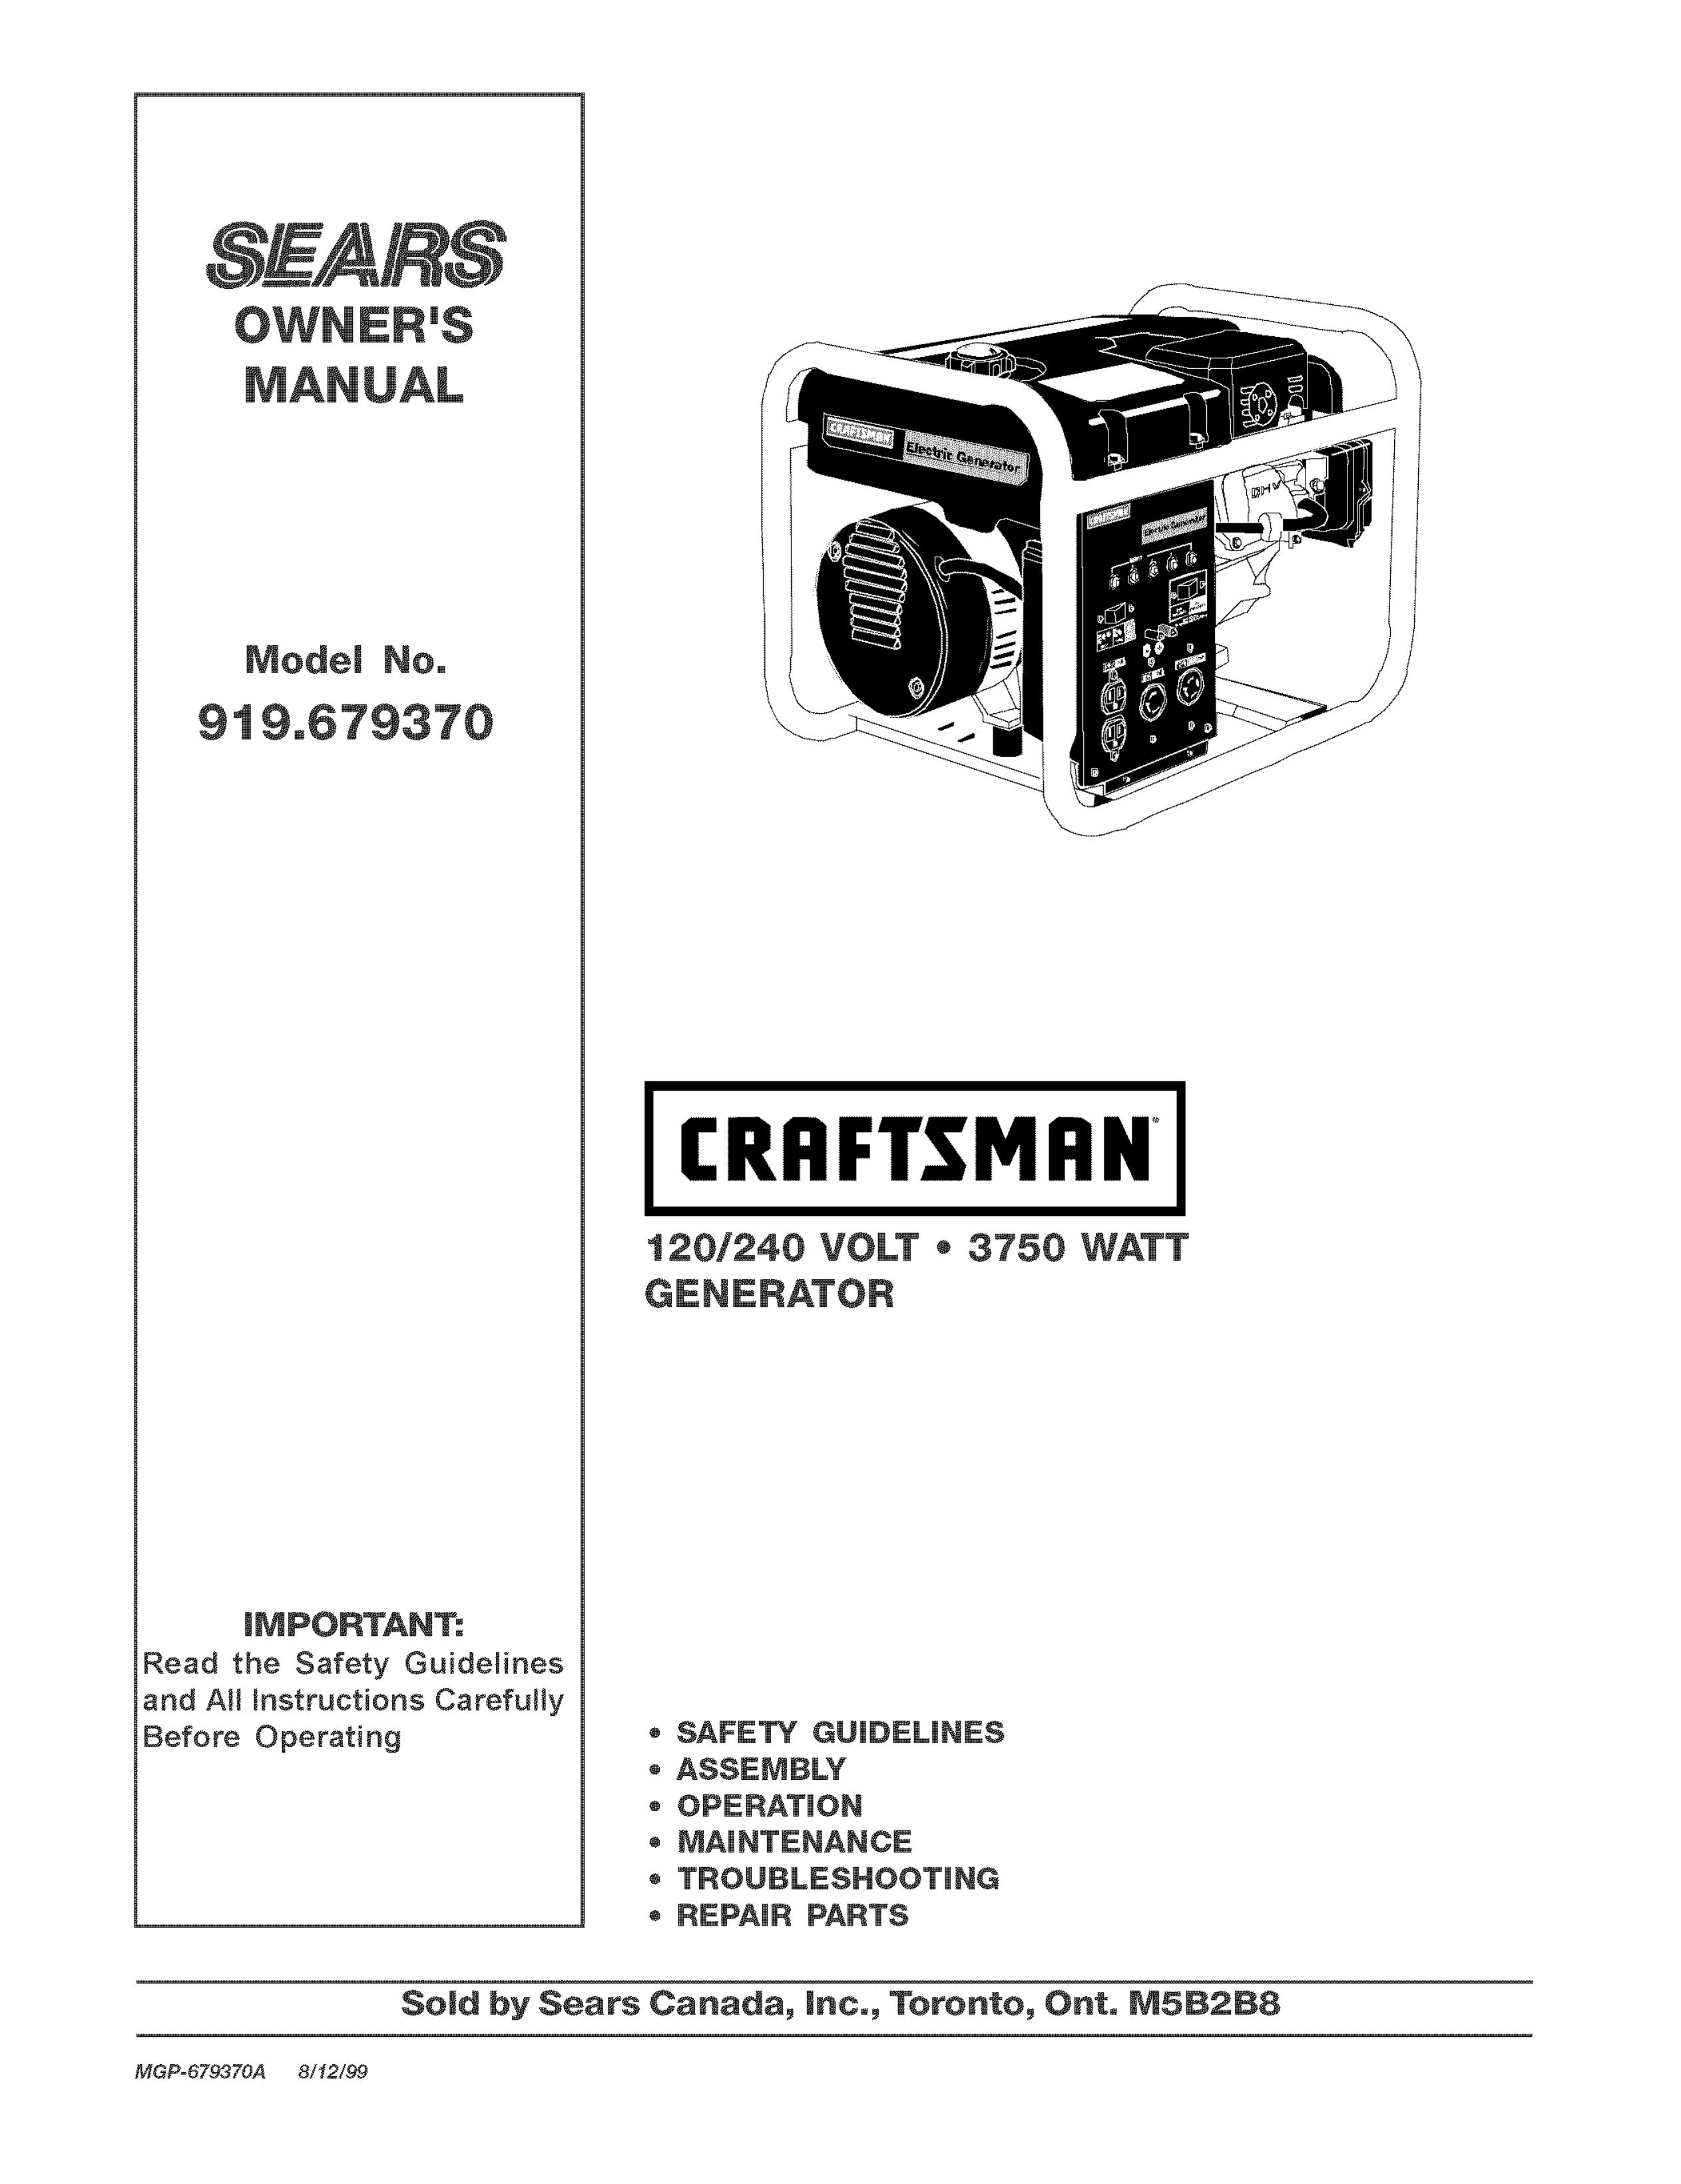 Craftsman 919.67937 Portable Generator User Manual